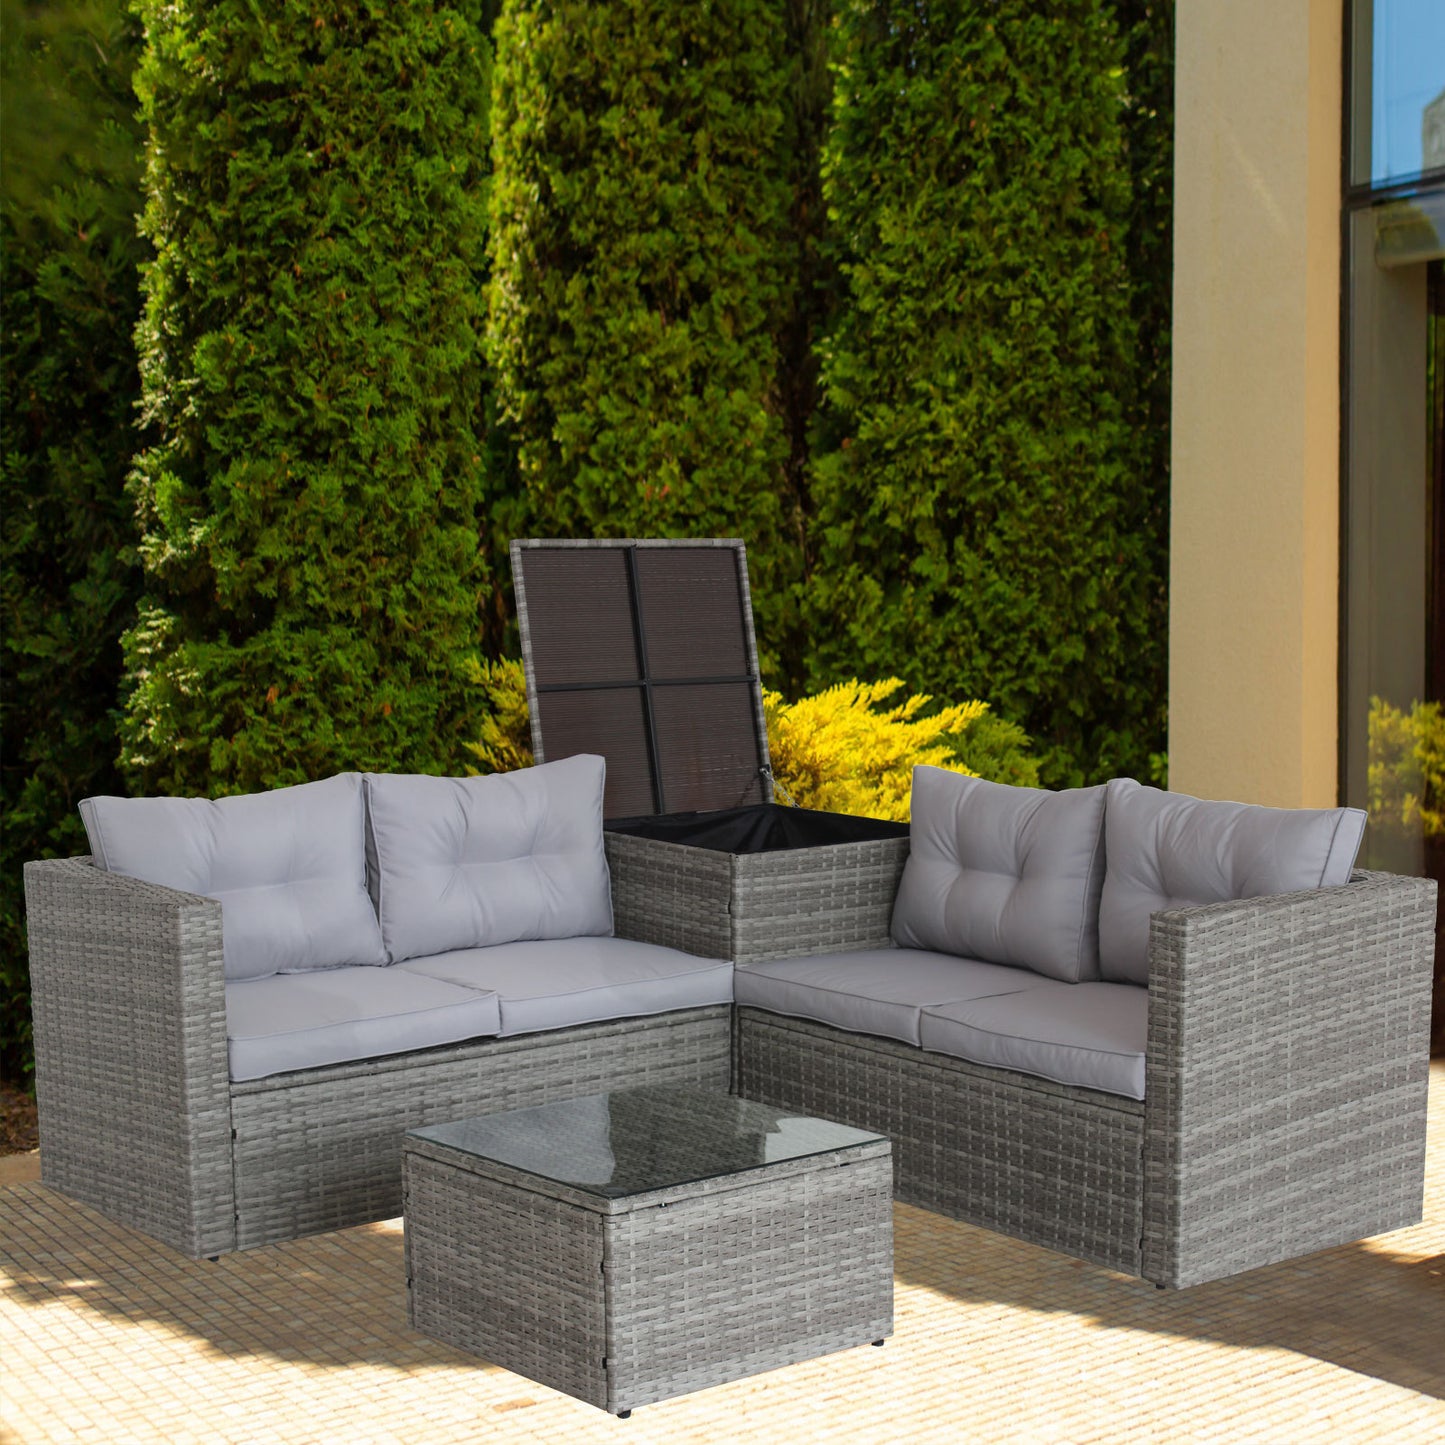 4 Piece Patio Sectional  Outdoor Furniture Sofa Set, Storage